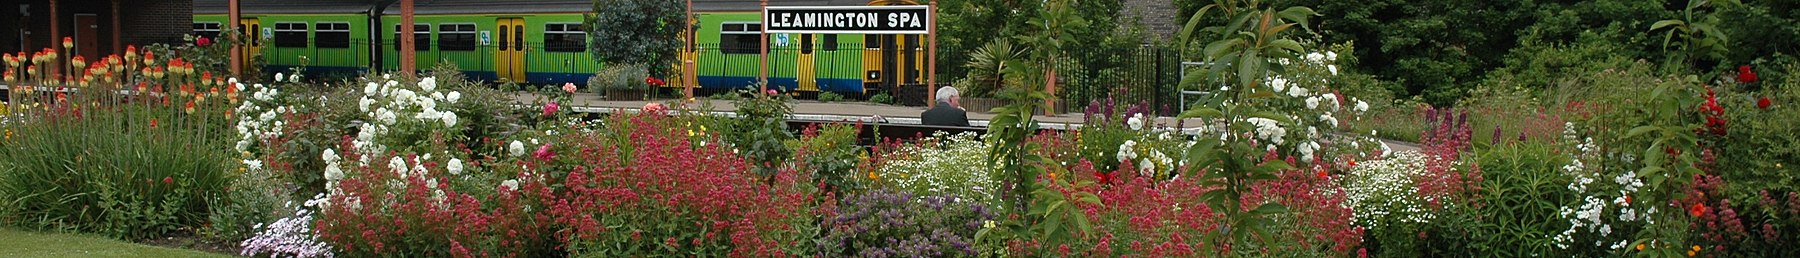 Leamington Spa banner stansiyası Garden.JPG